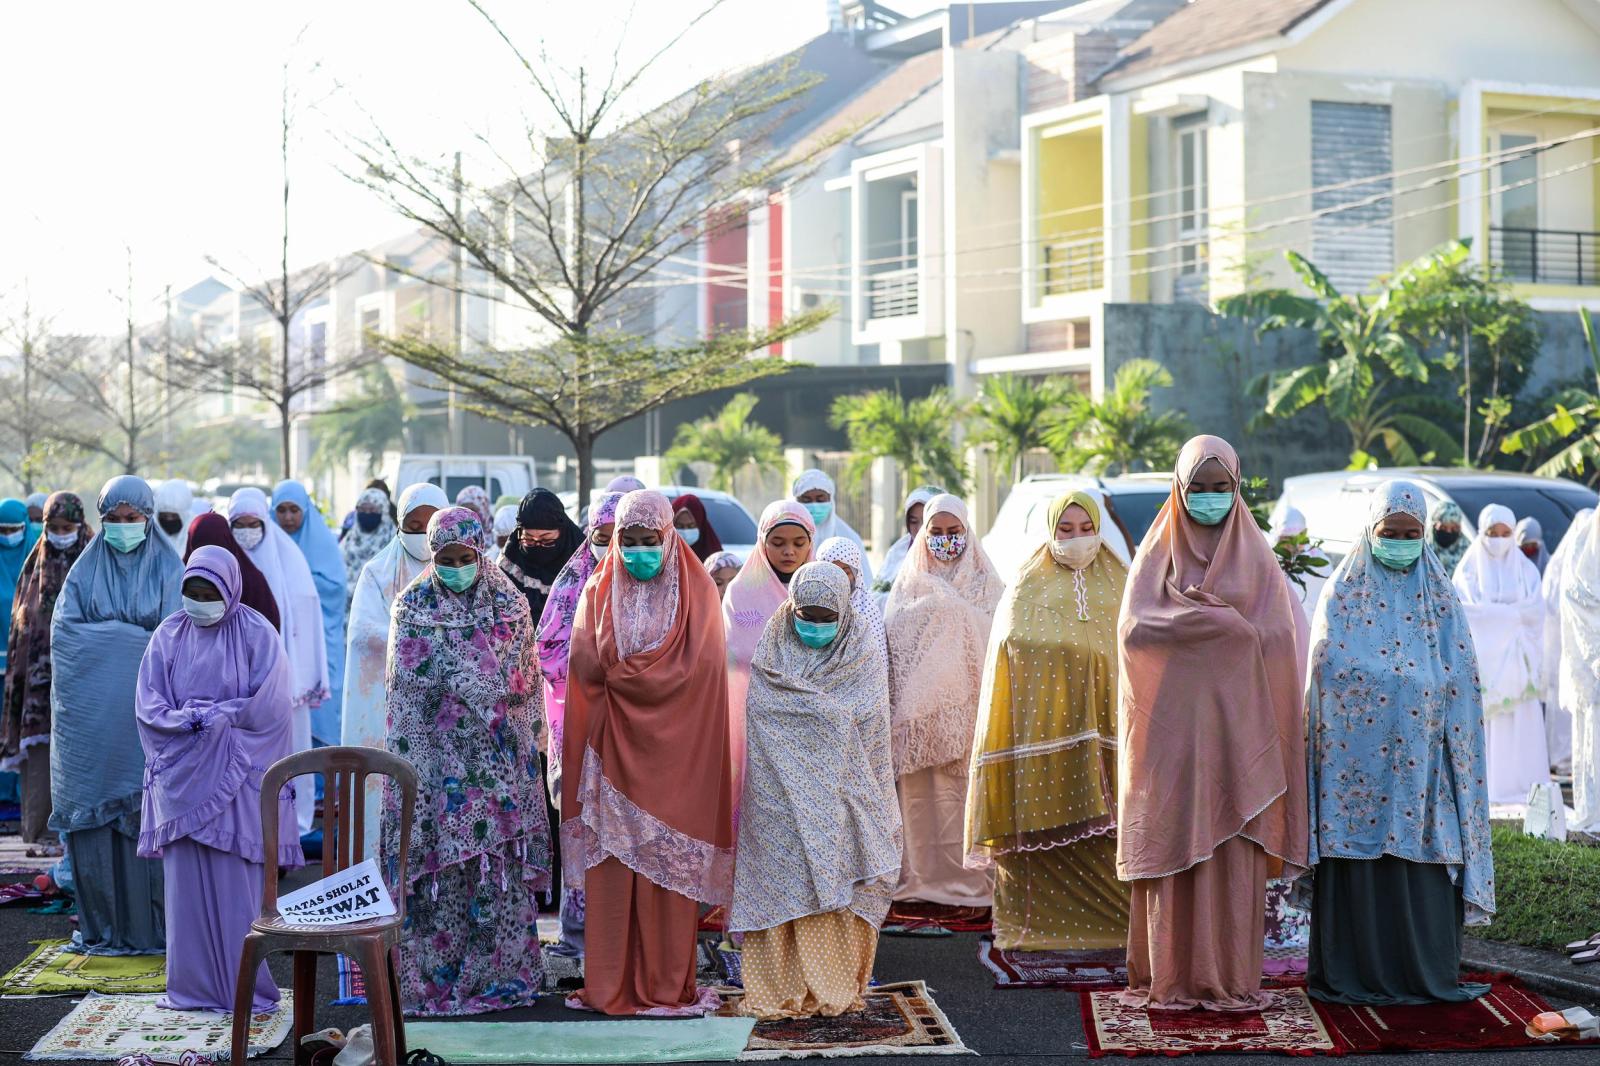 Thumbnail of Garry Lotulung,&nbsp; Muslim_May 24, 2020, Bekasi, Indonesia.